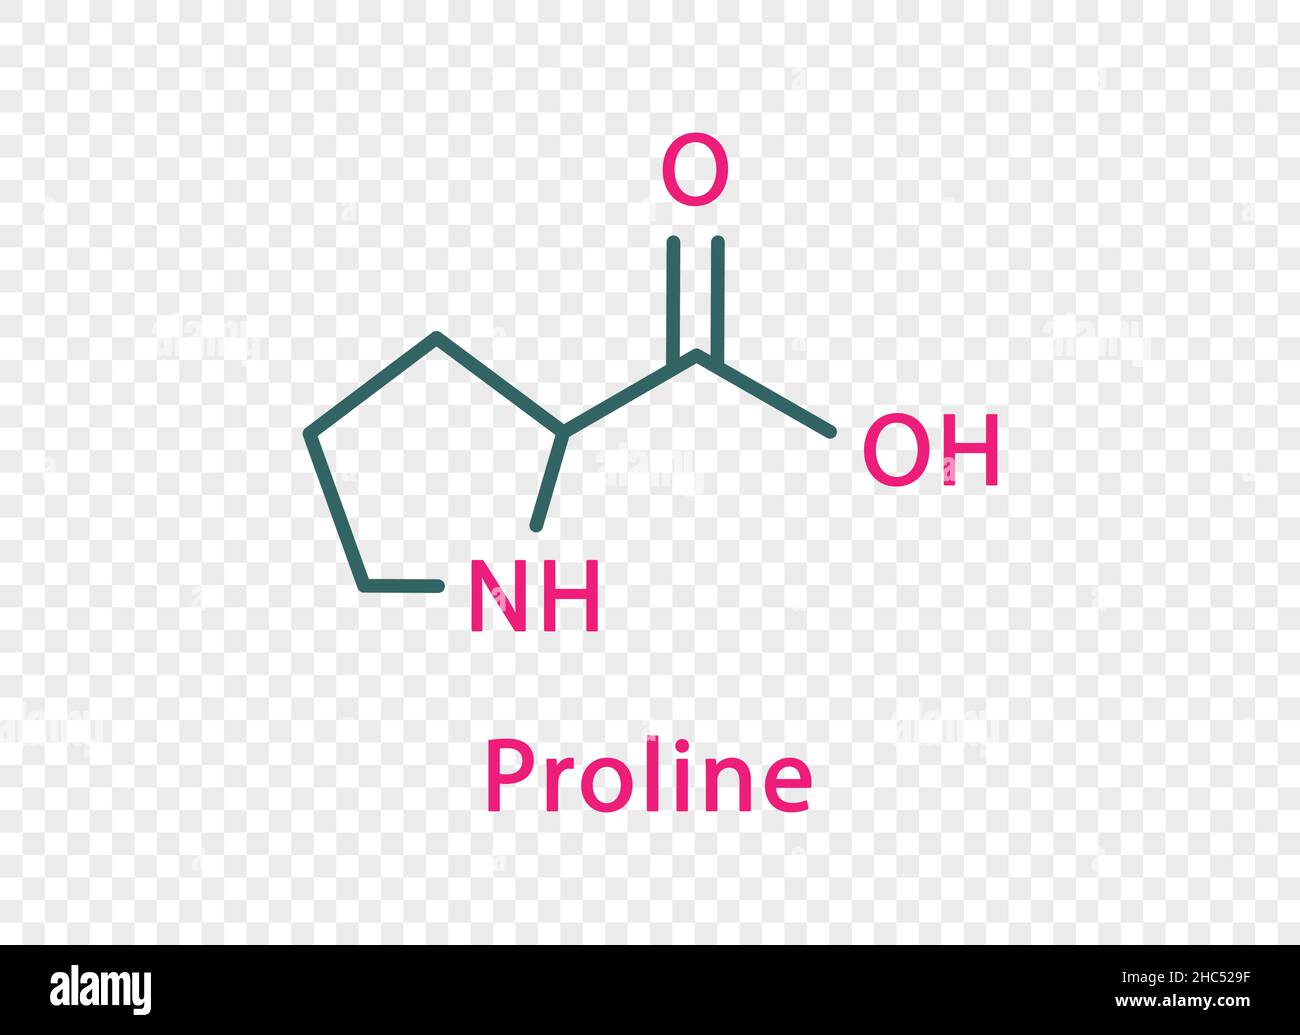 Proline chemical formula. Proline structural chemical formula isolated on transparent background. Stock Vector